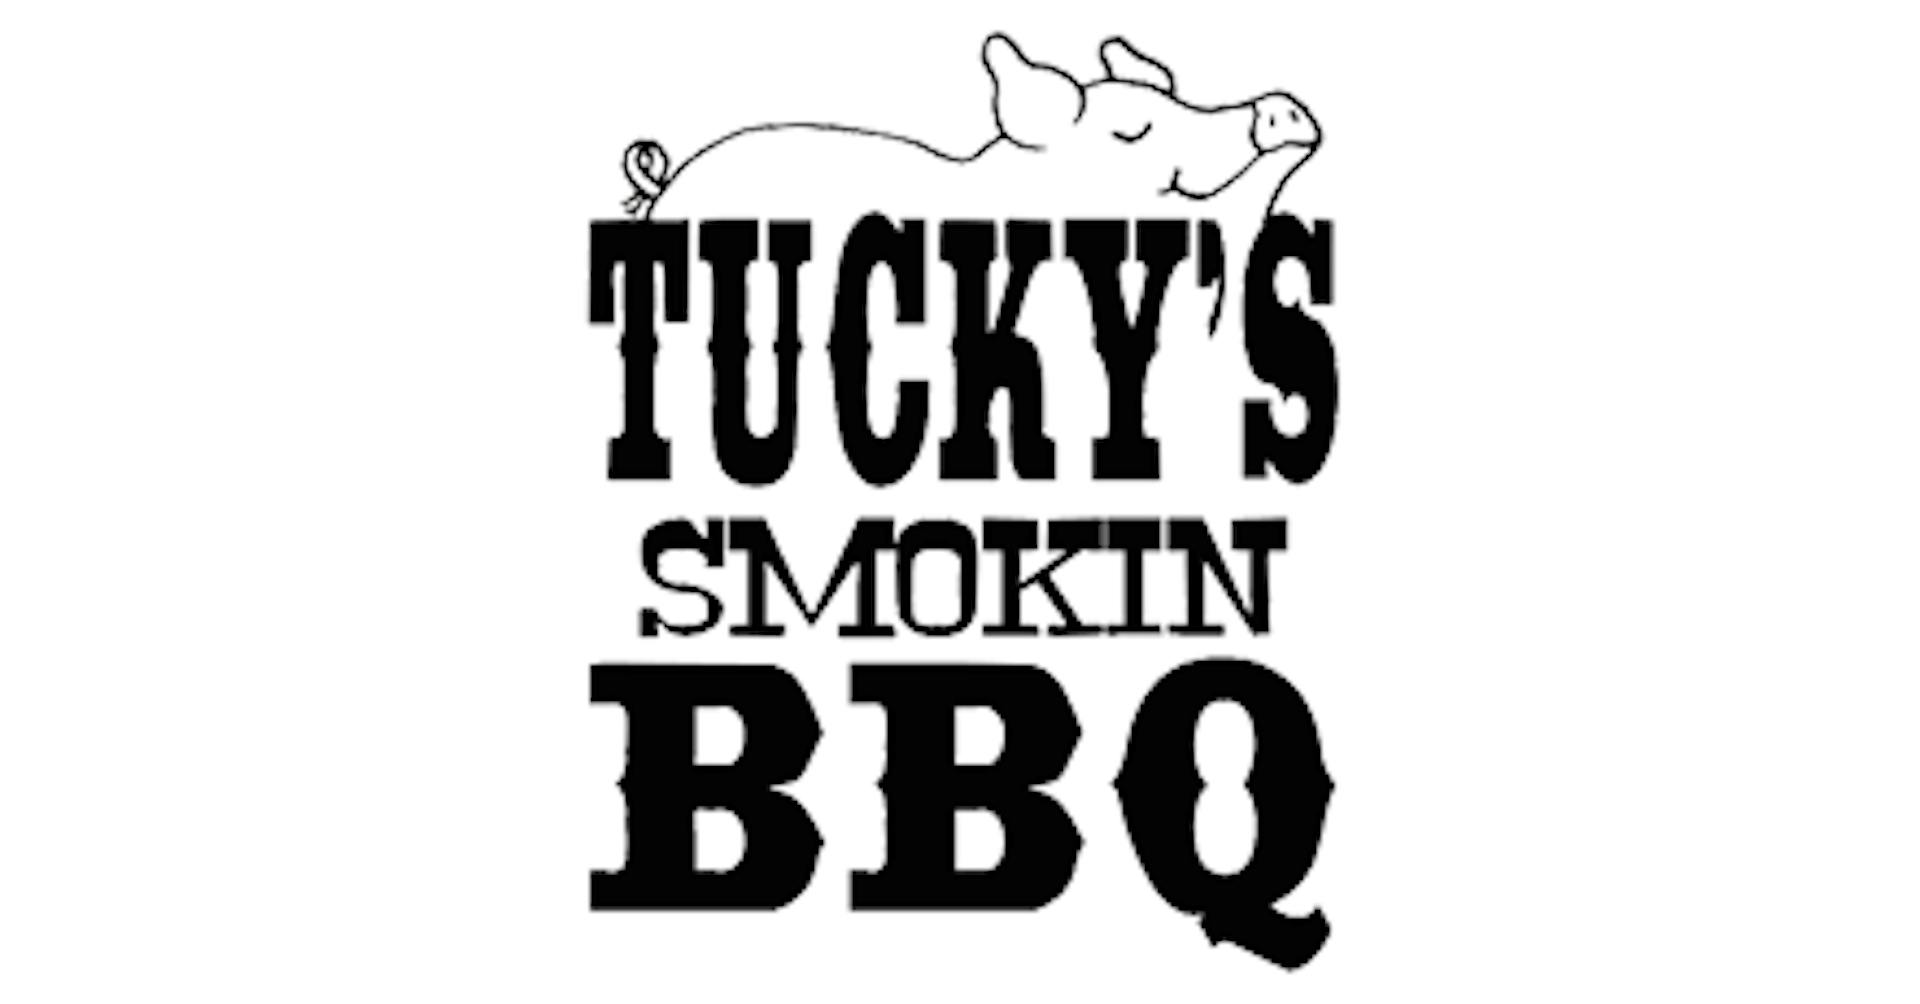 Tucky's BBQ